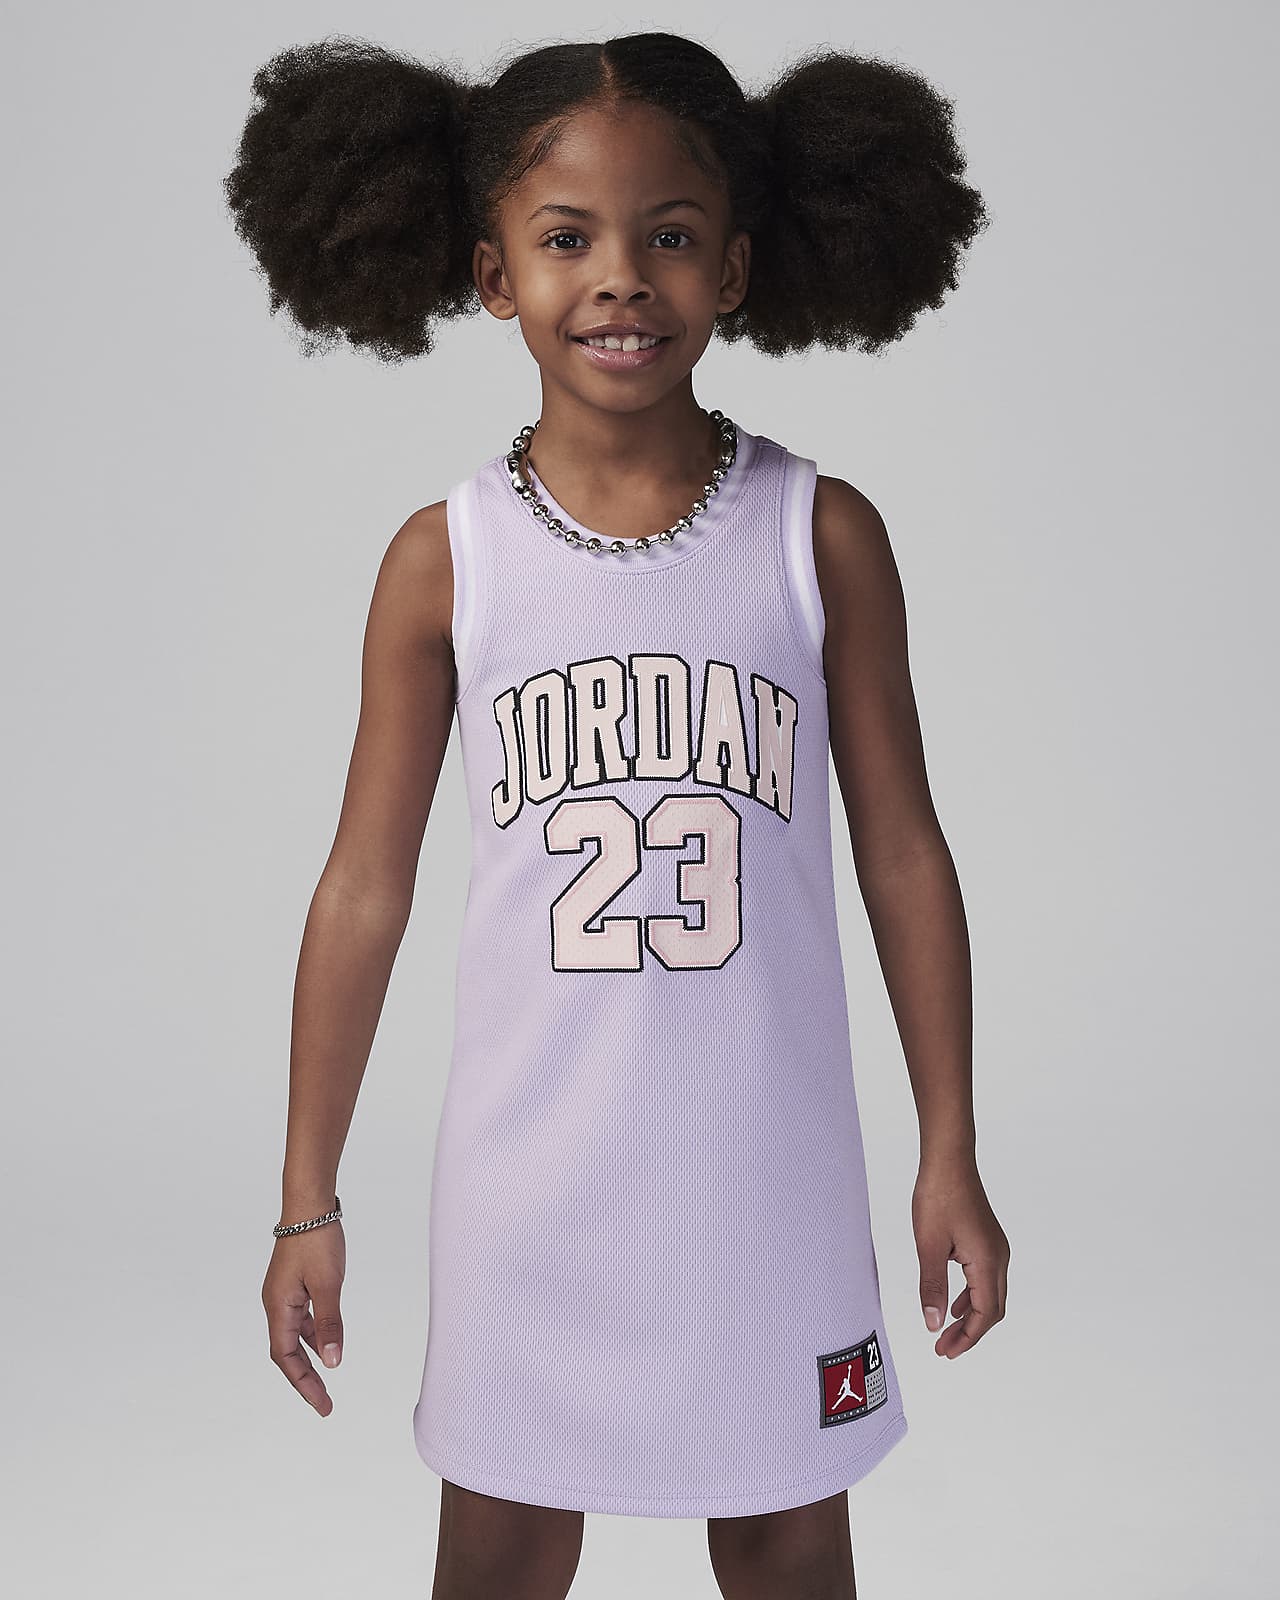 Jordan 23 Little Kids' Dress